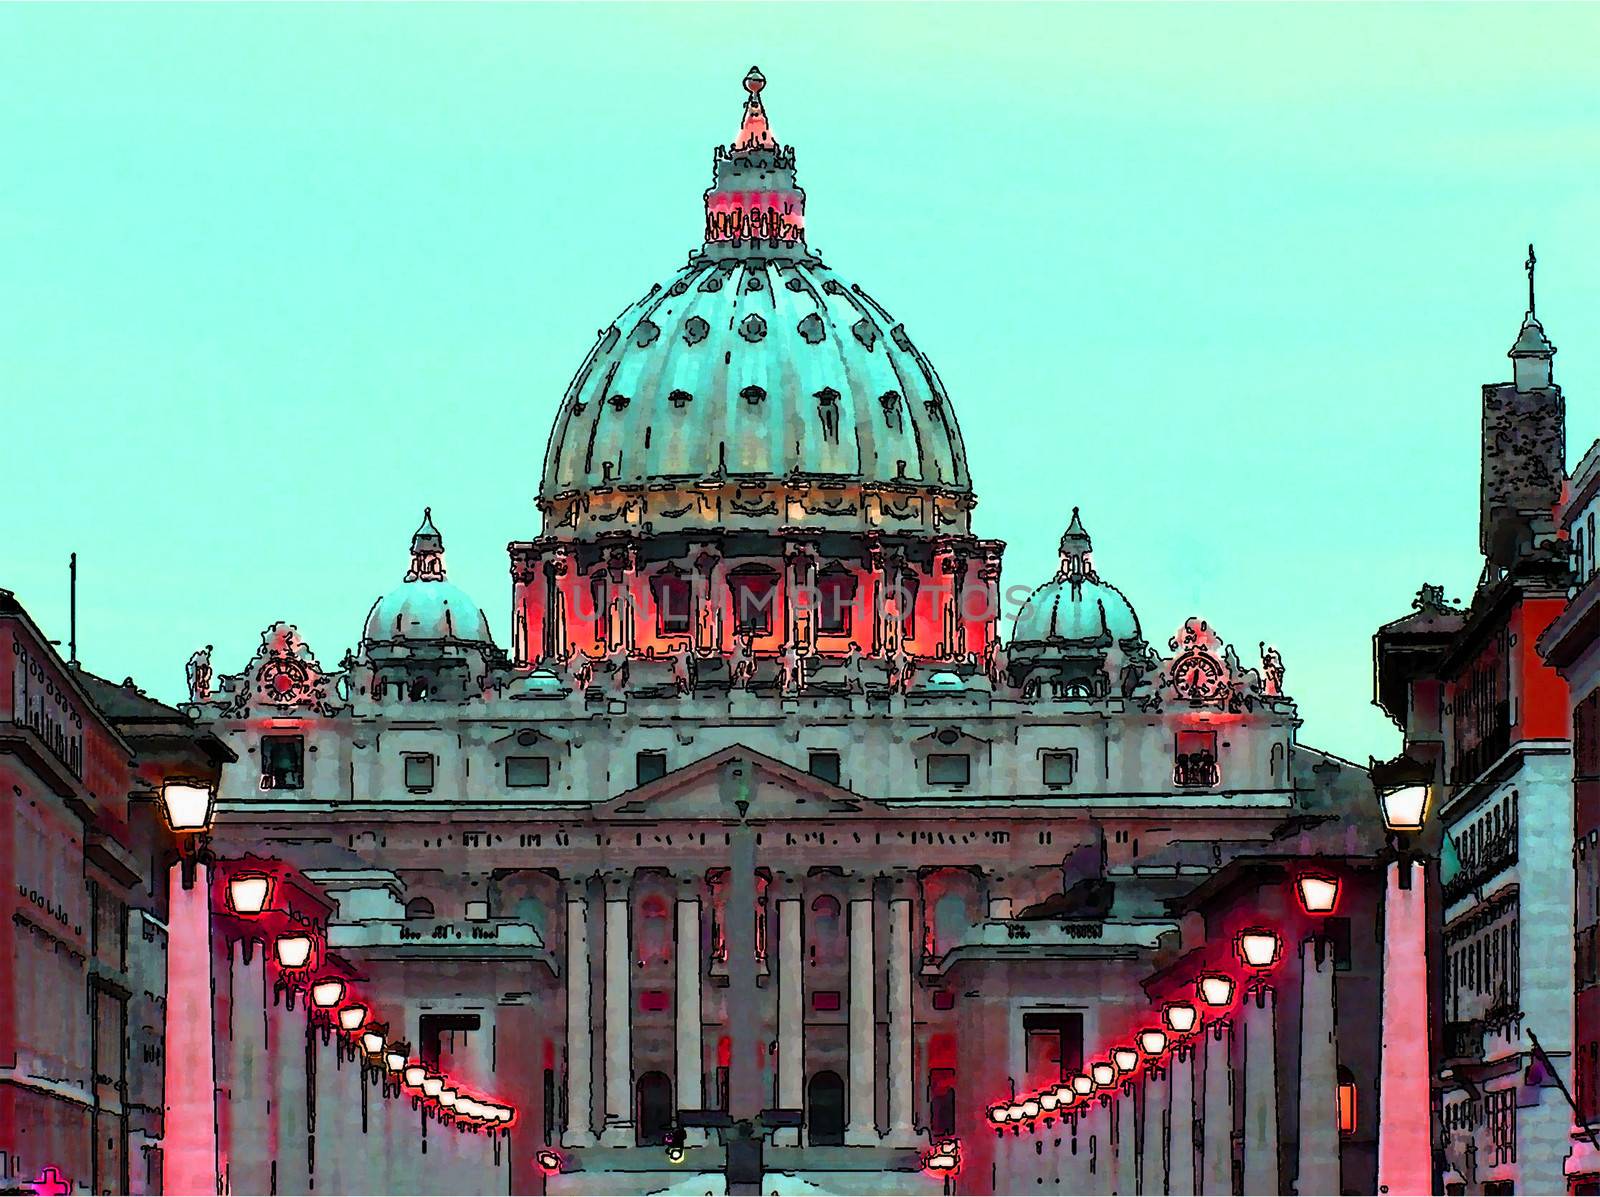 Rome, St. Peter's Basilica by konradkerker